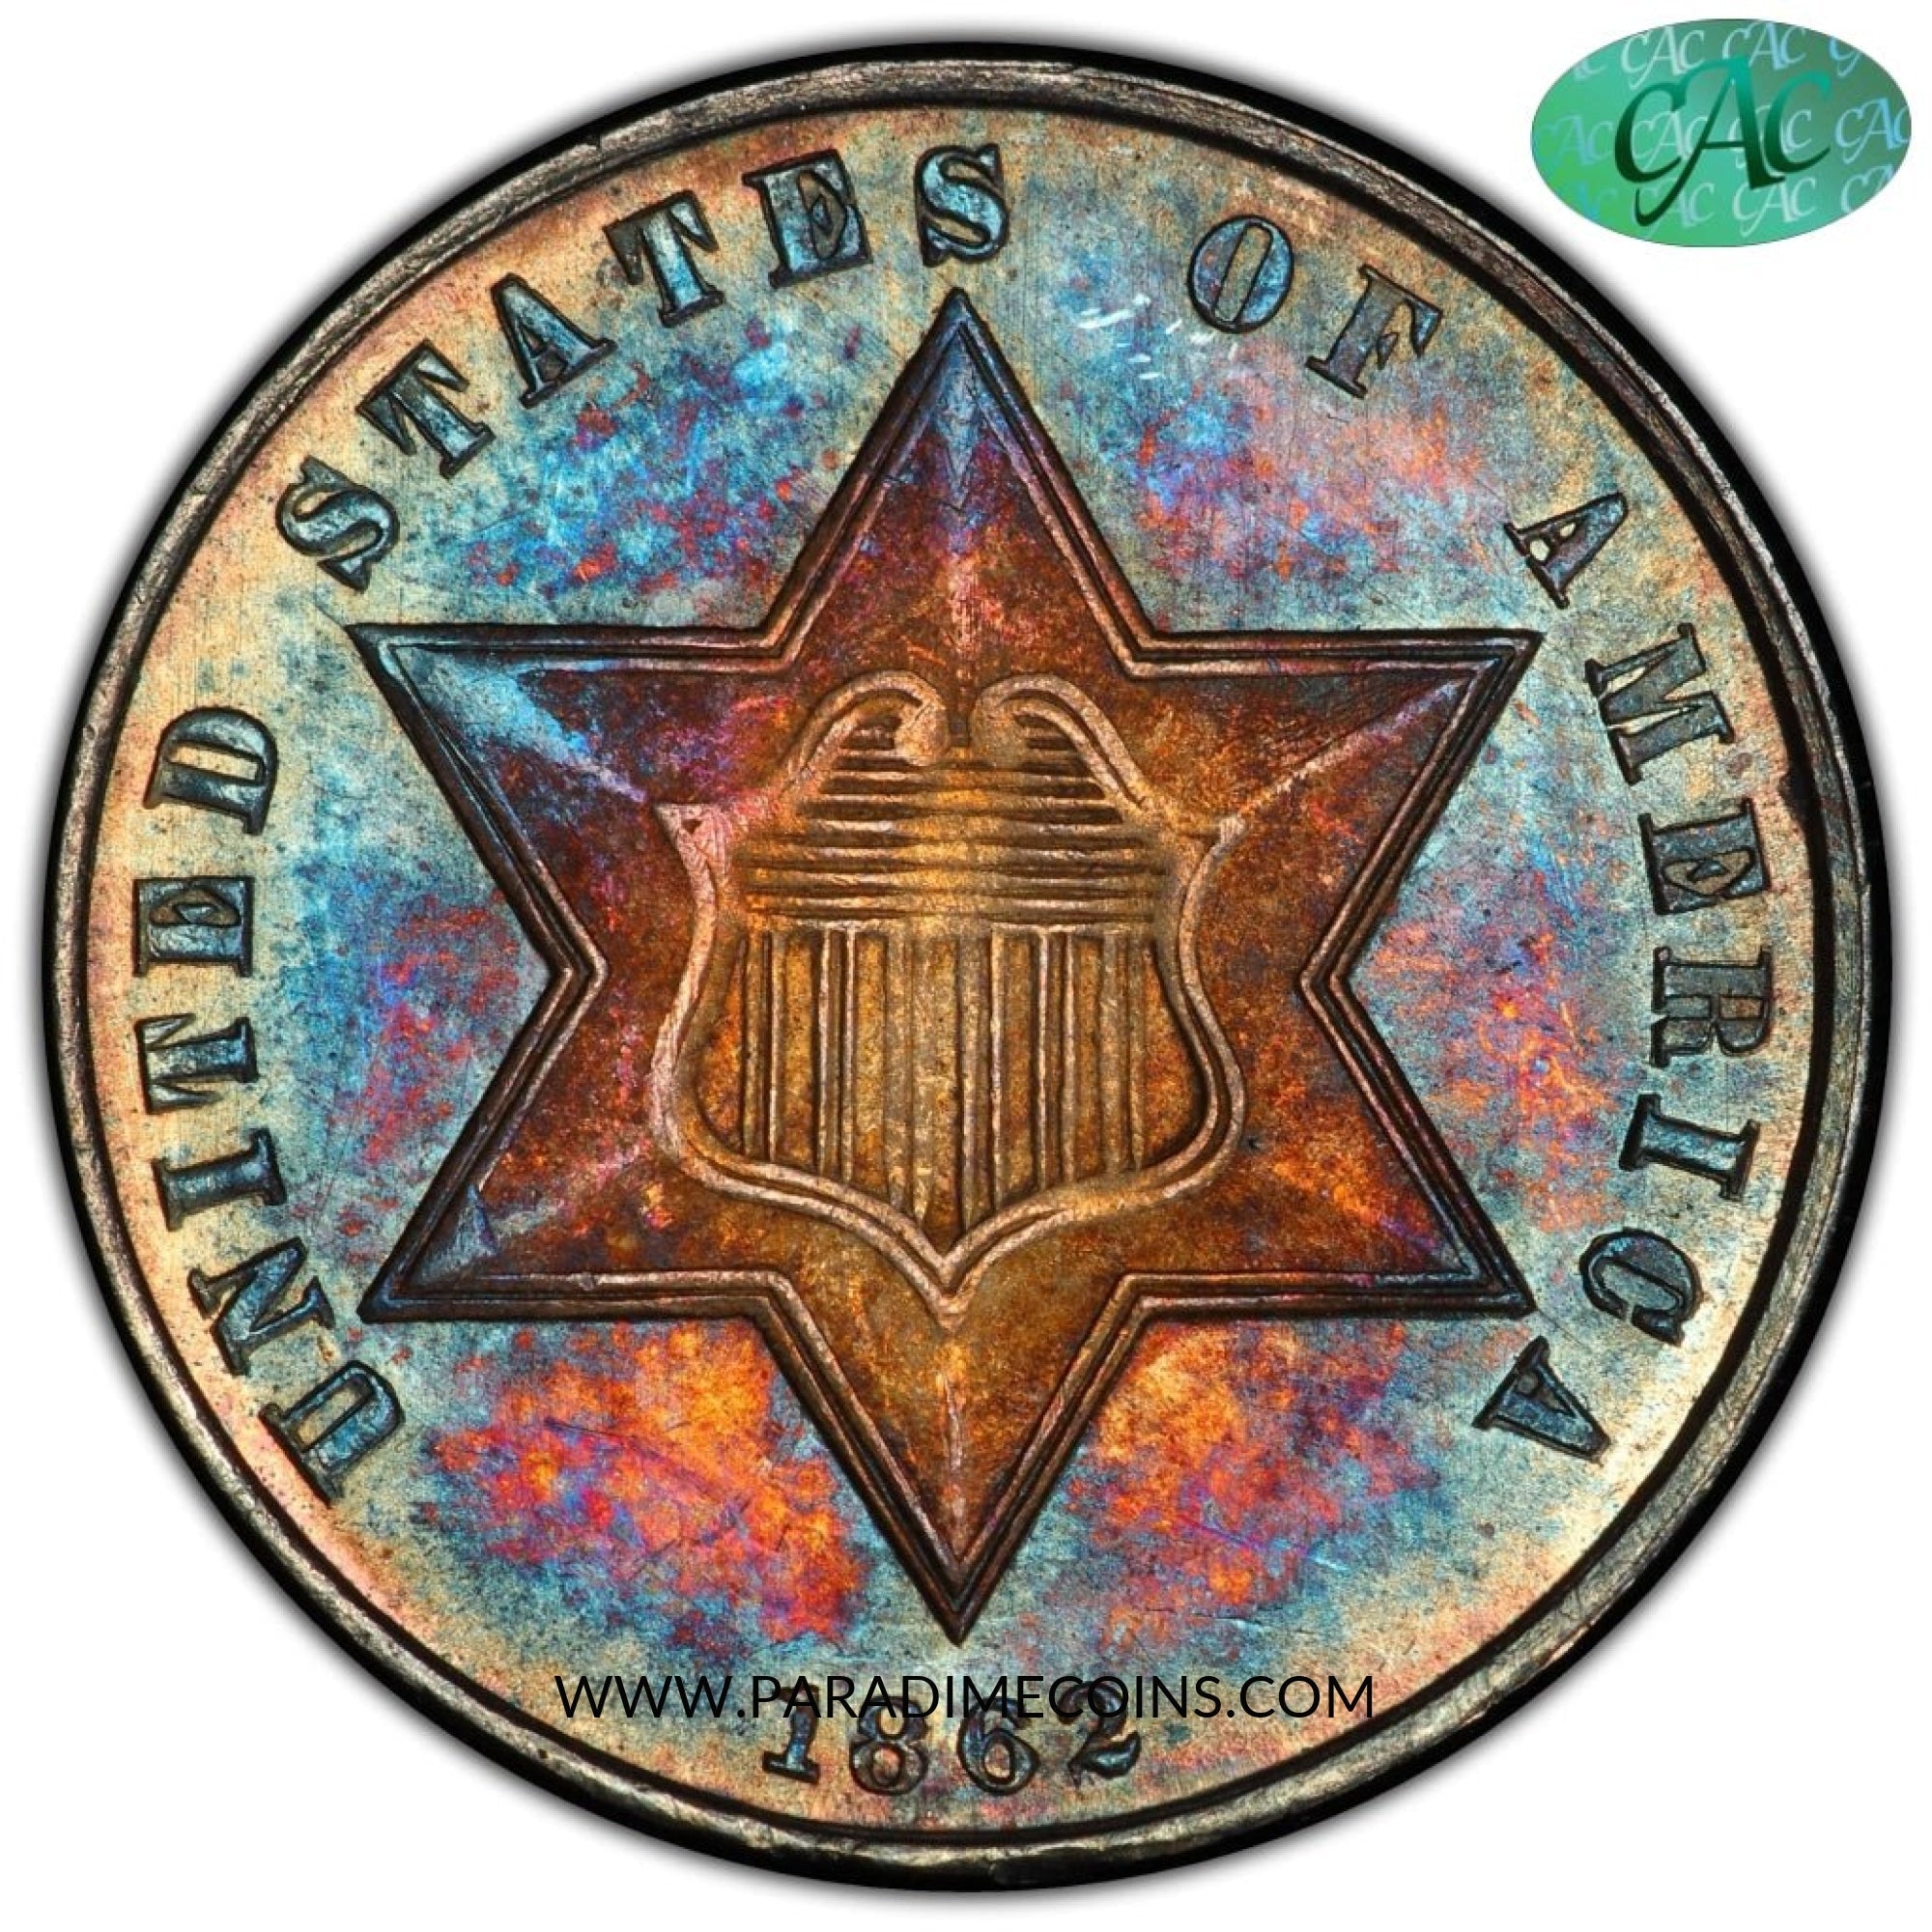 1862 3CS MS66 PCGS CAC - Paradime Coins | PCGS NGC CACG CAC Rare US Numismatic Coins For Sale